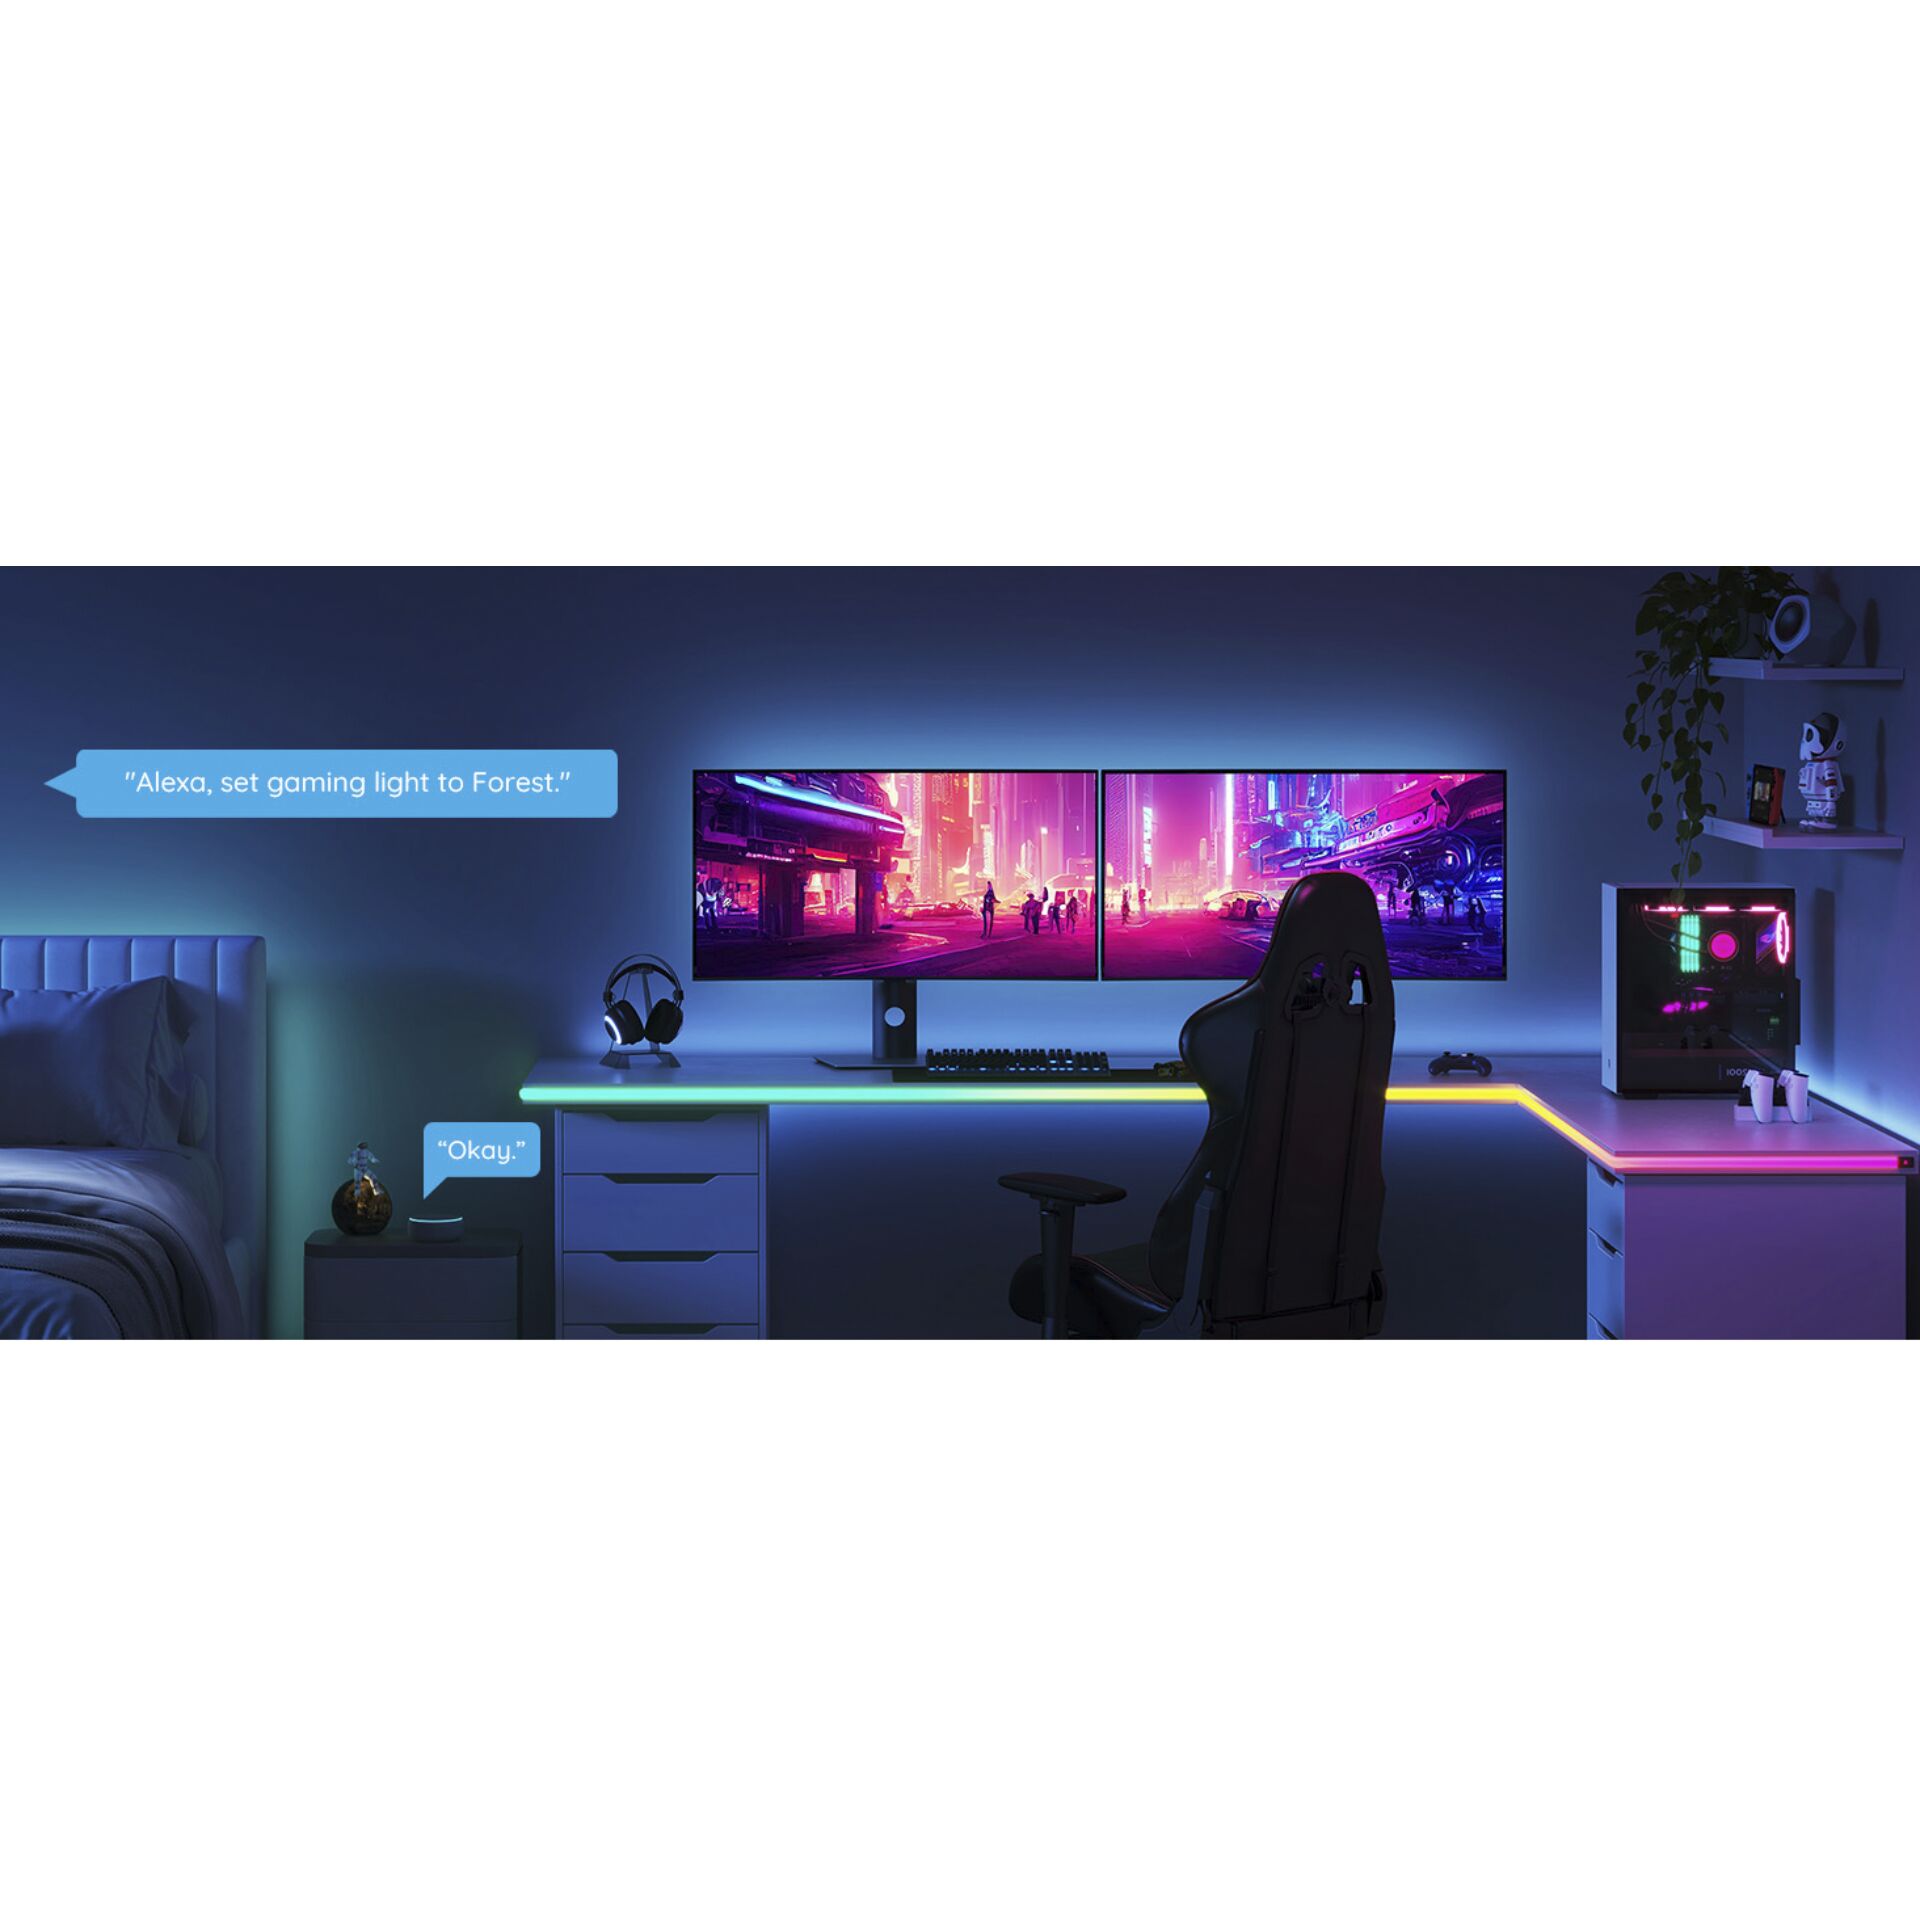 Govee Neon Gaming Bordslampa